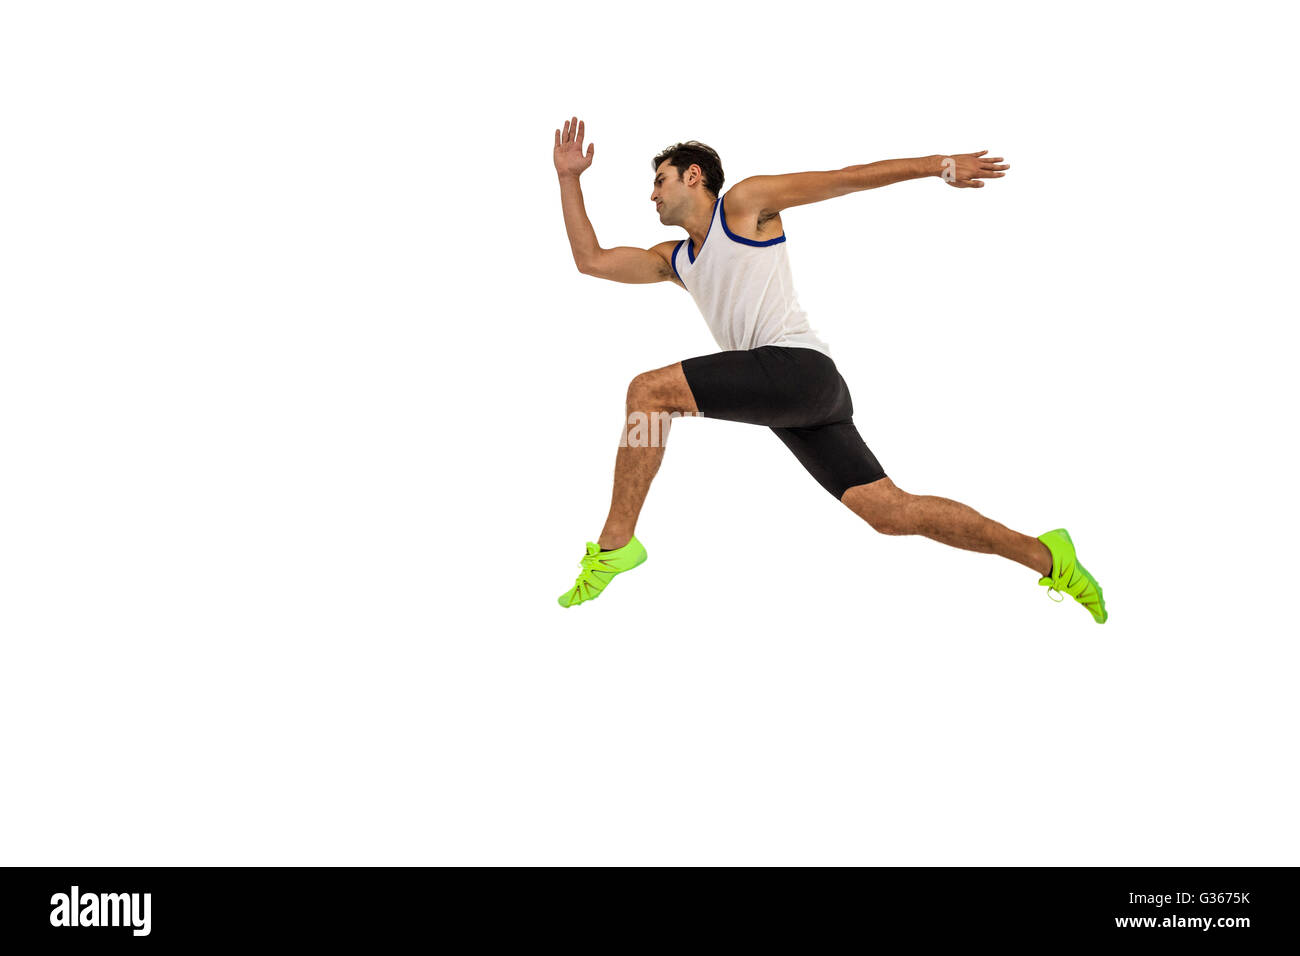 Male athlete running on white background Stock Photo